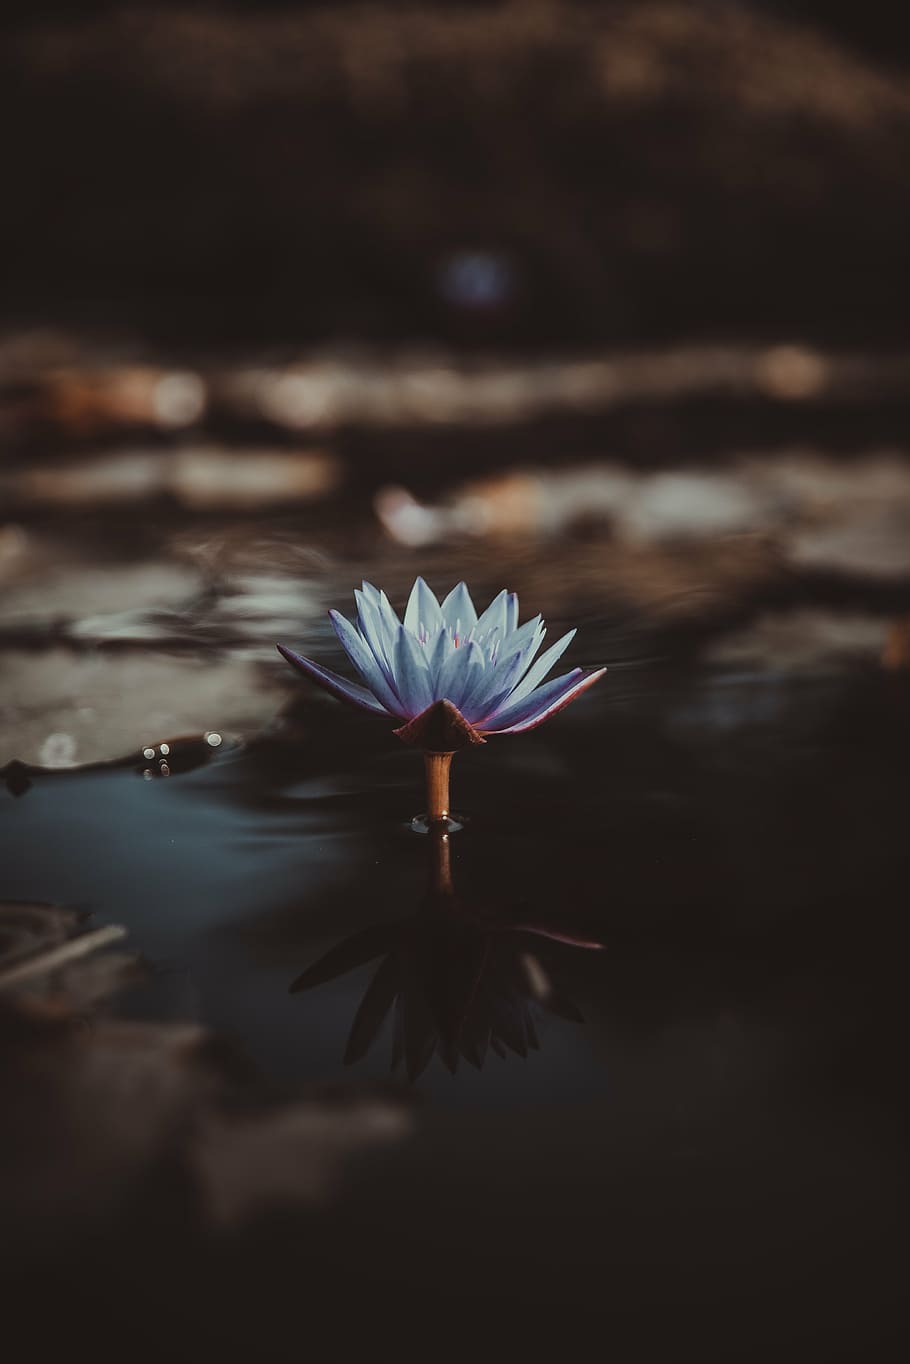 selectivo, fotografía de enfoque, flor de loto verde azulado, planta, nenúfar, vaina, lavanda, reflexión, pétalo, floración